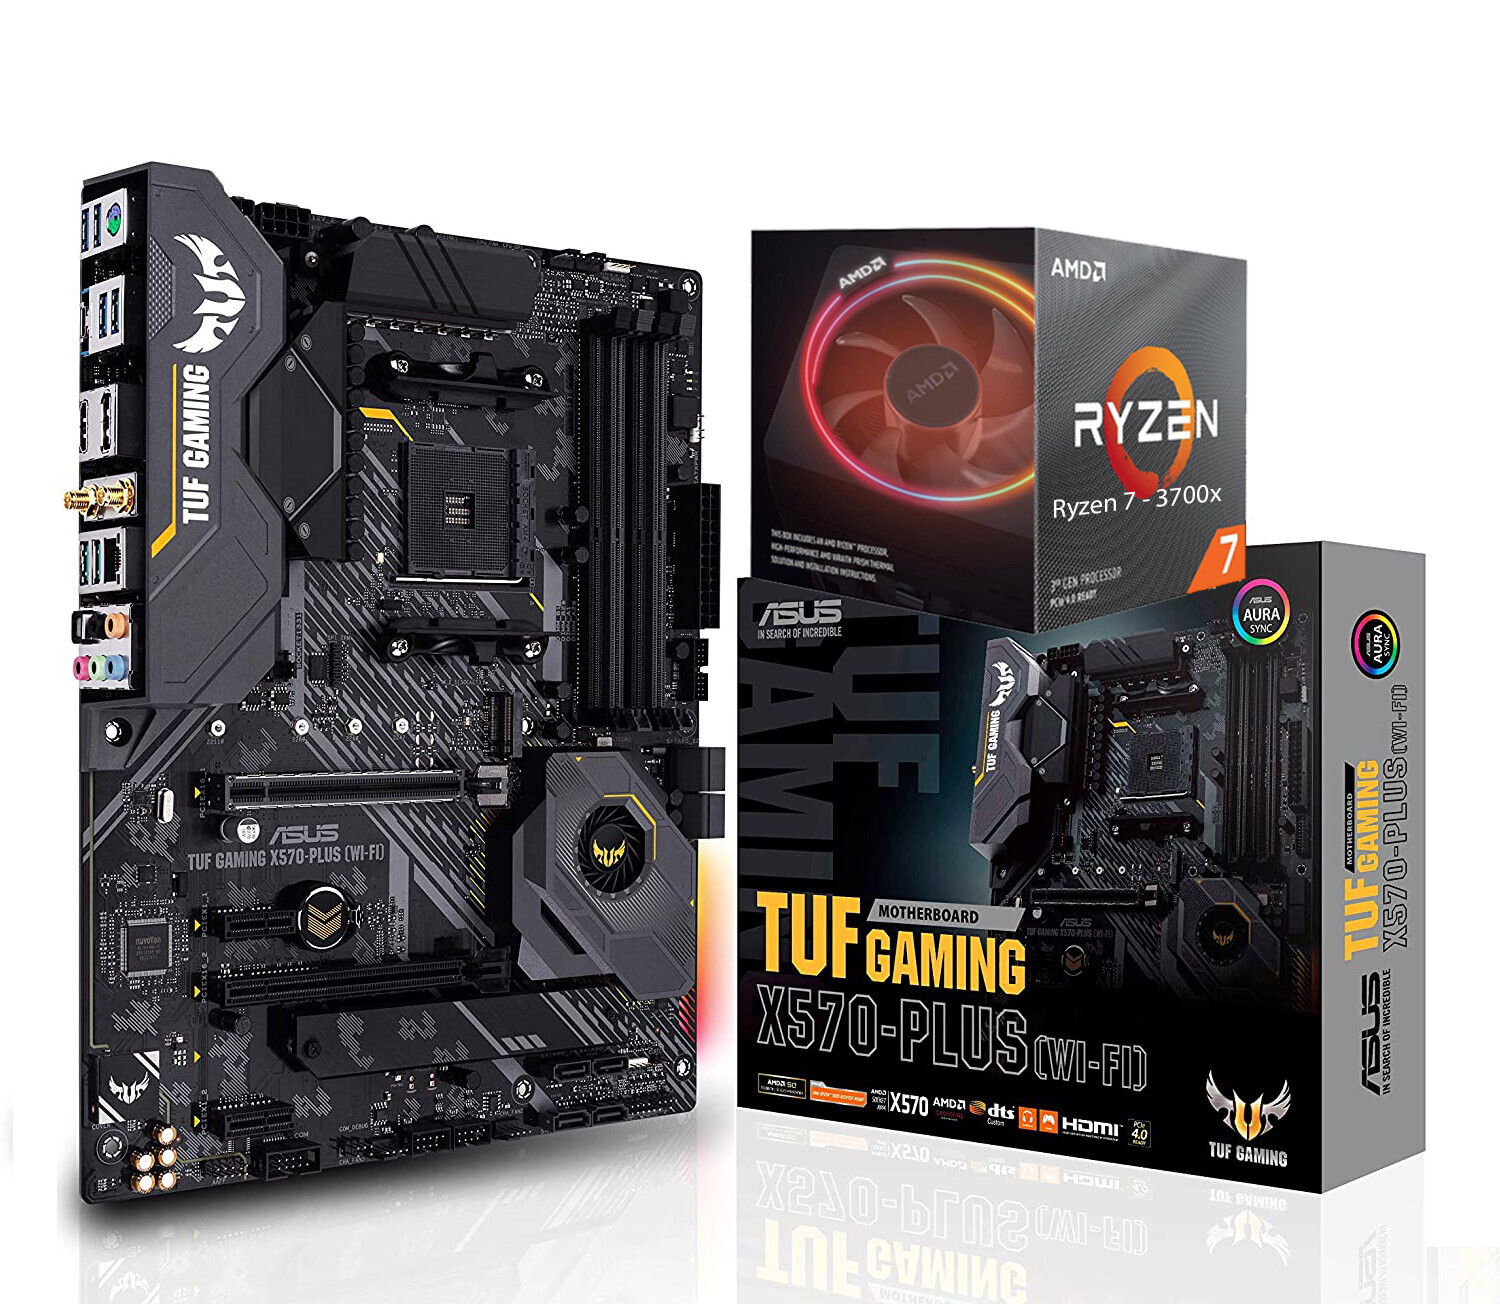 AMD RYZEN 7 3700X 8-Core 3.6 GHz (4.4 GHz Max Boost) + Asus TUF Gaming X570-Plus (Wi-Fi) ATX Motherboard Bundle